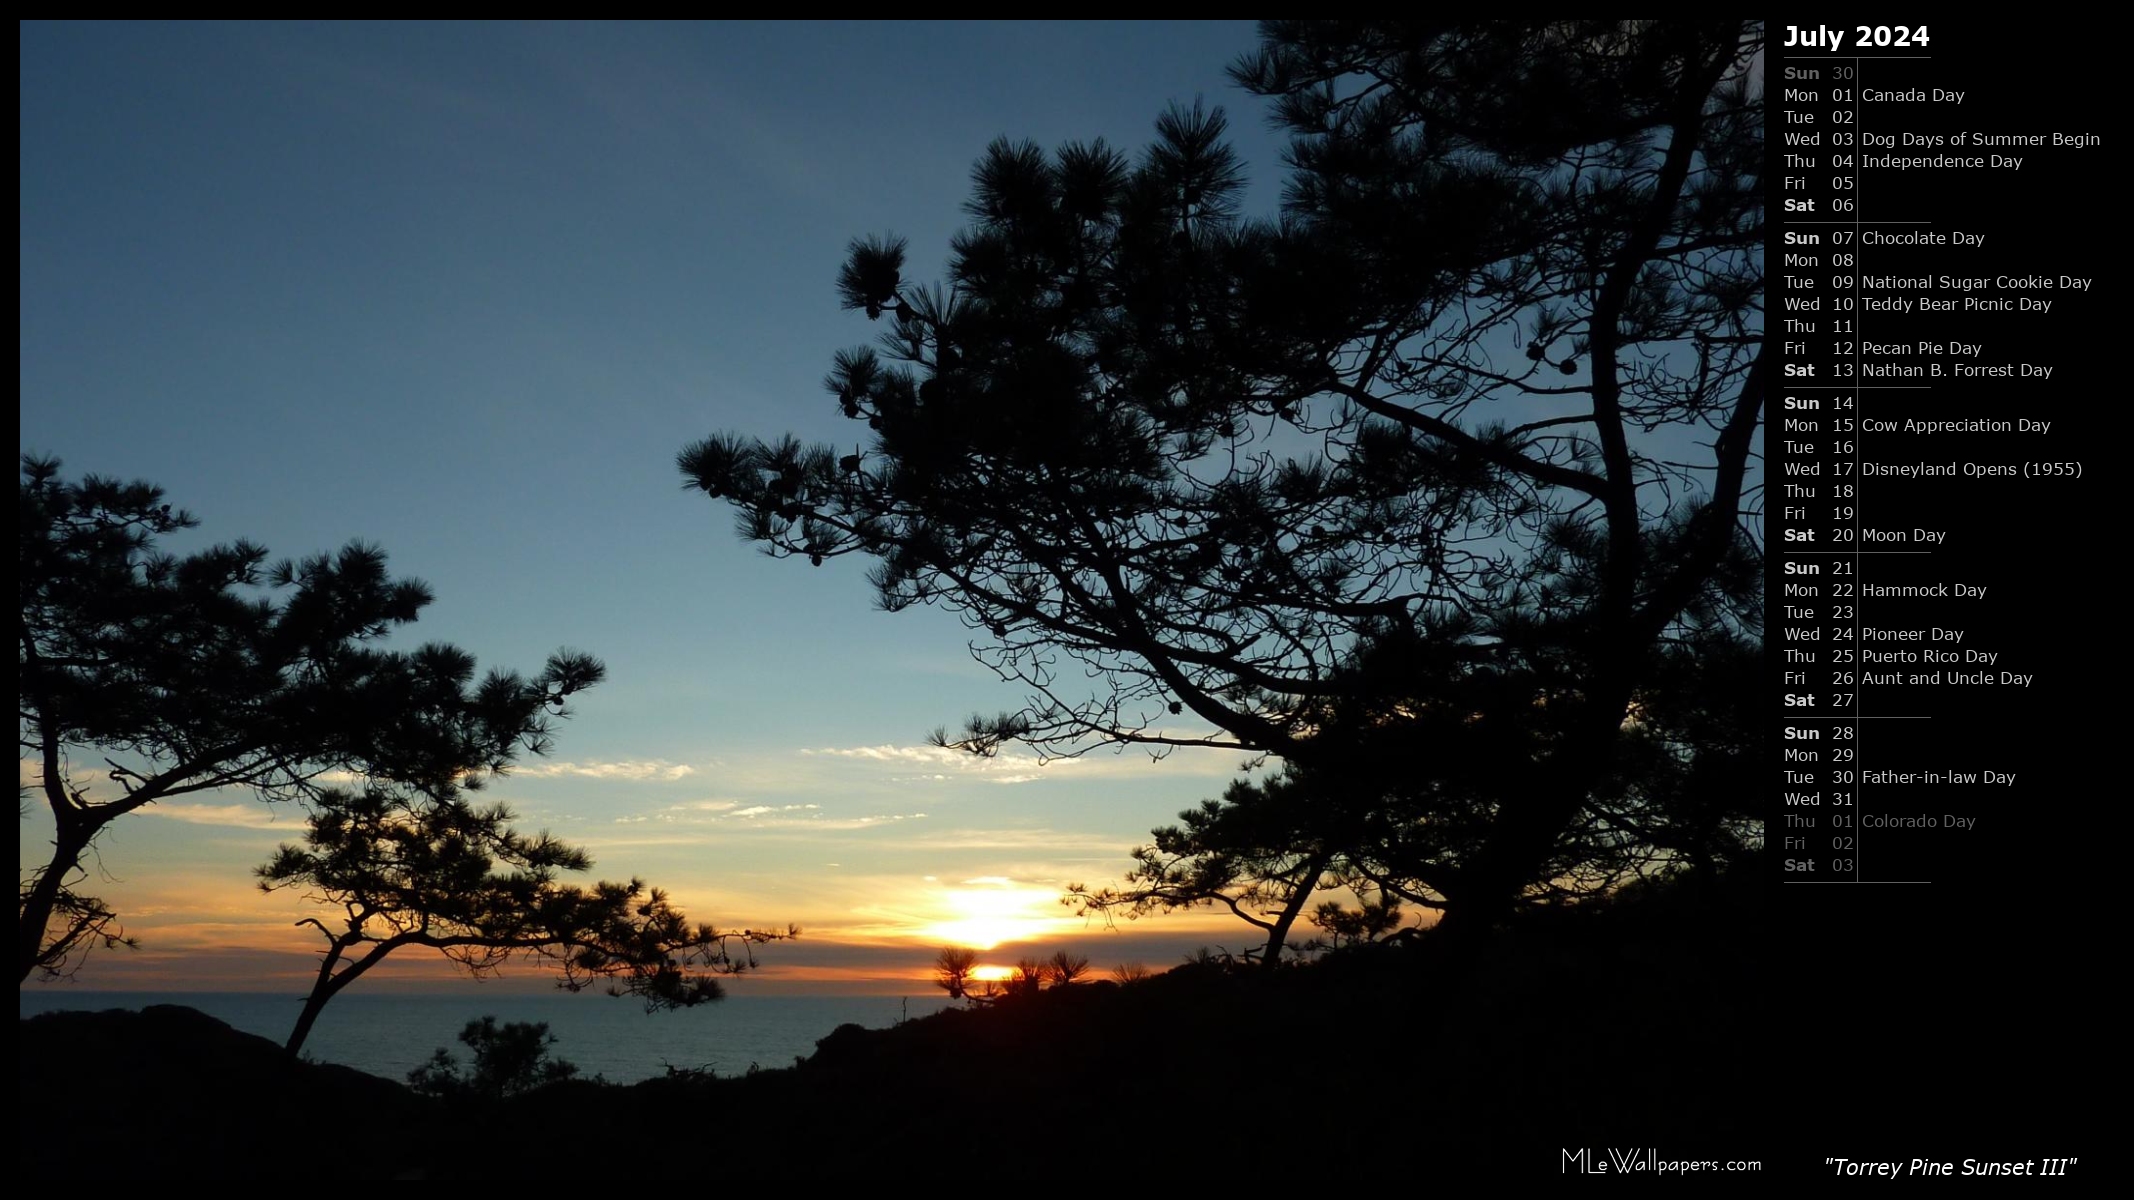 Torrey Pine Sunset III (Calendar)